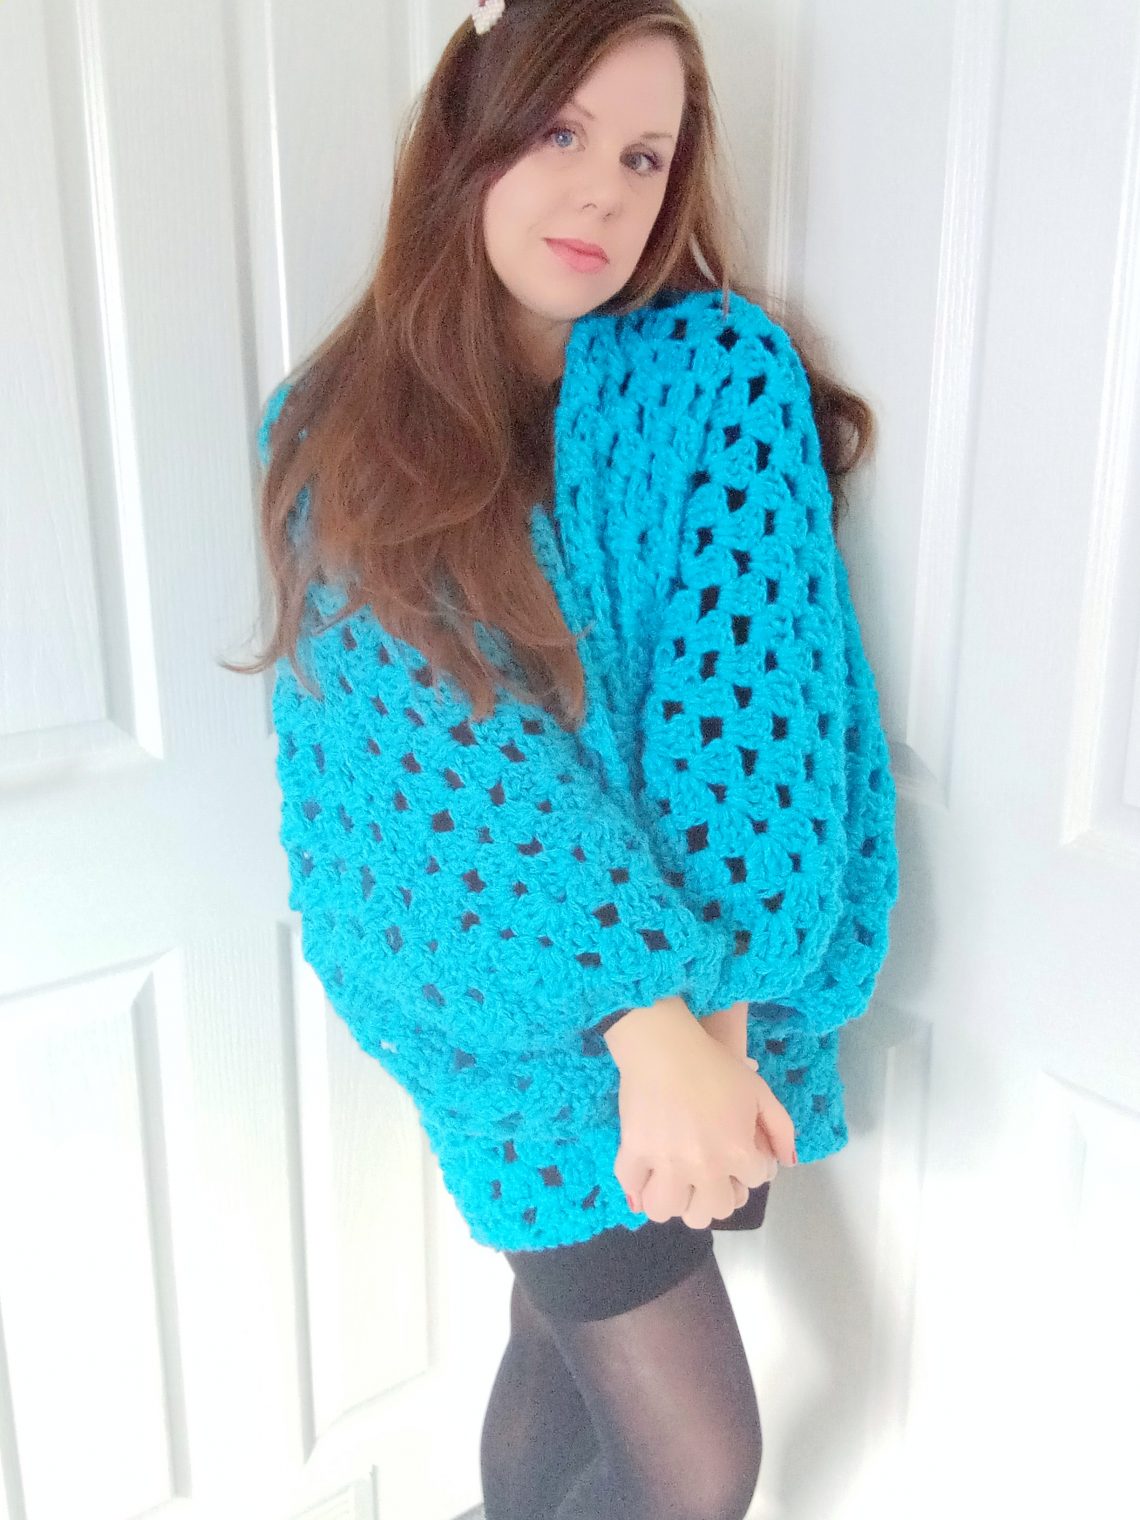 Crochet The Sapphire Hexagon Cardigan Pattern